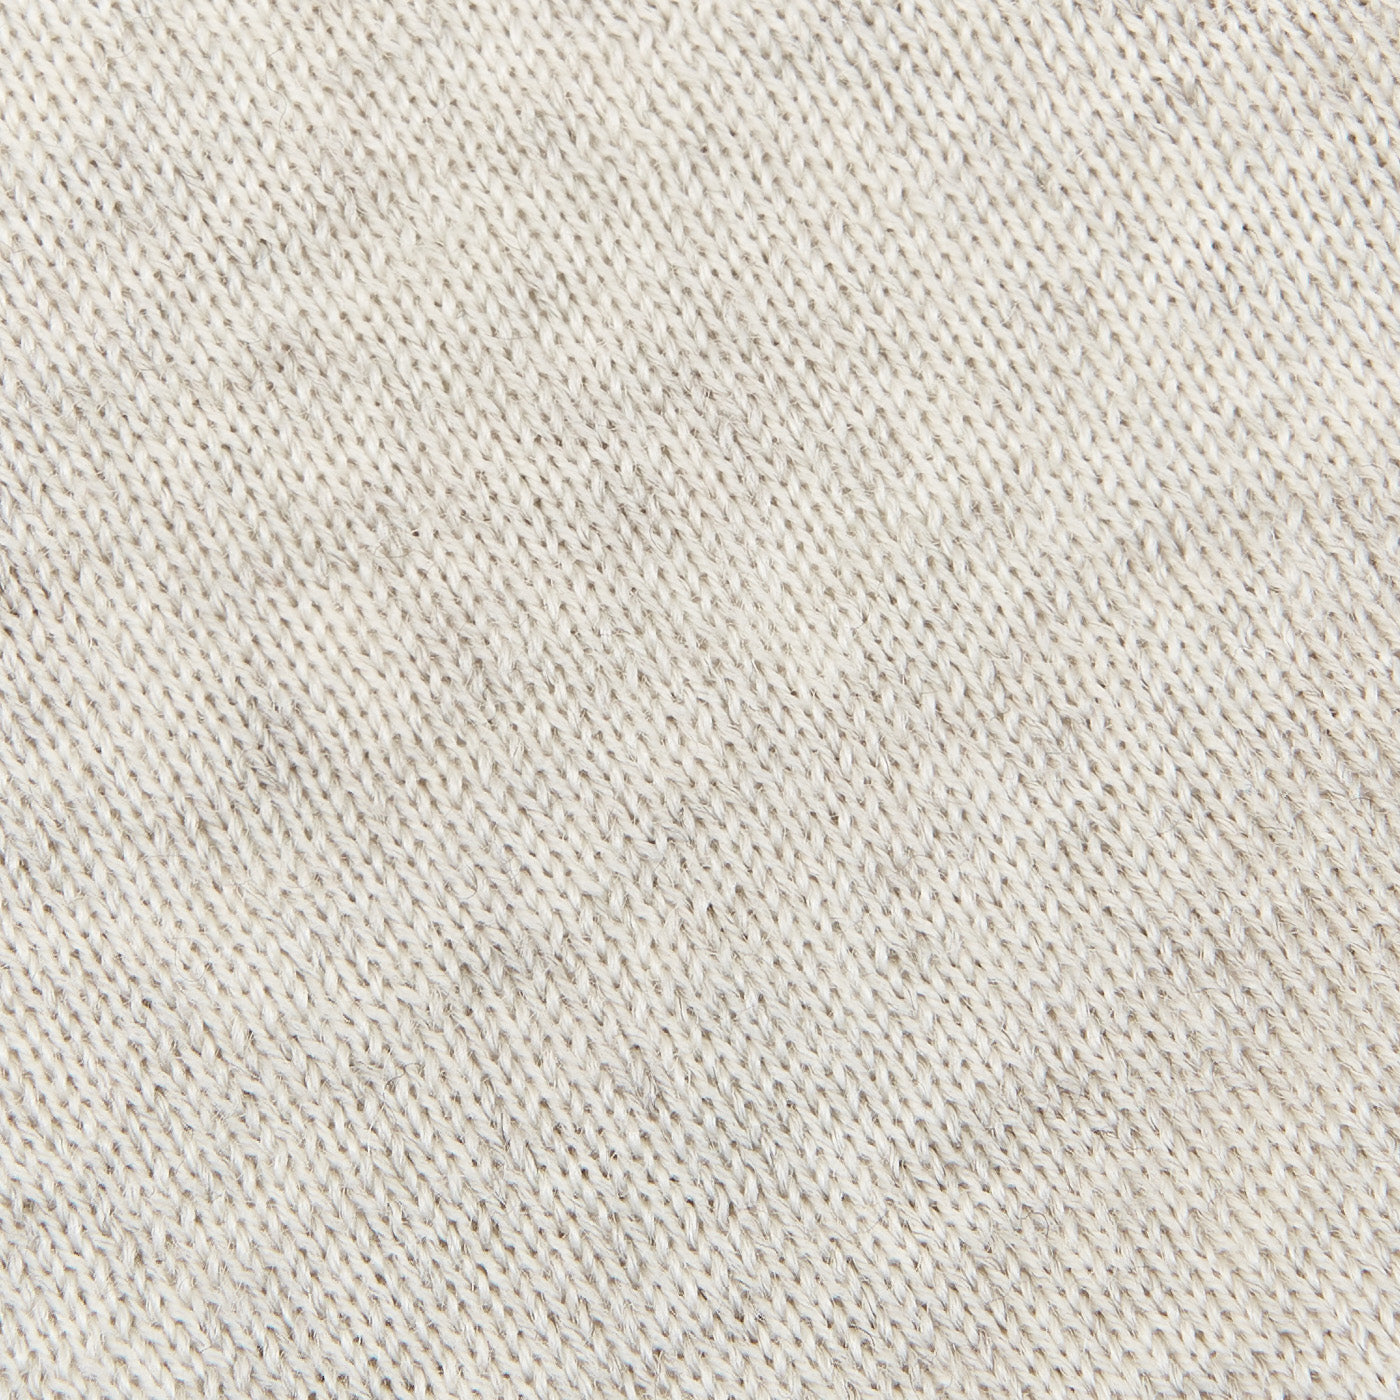 Canali Beige Grey Merino Wool College Sweater Fabric